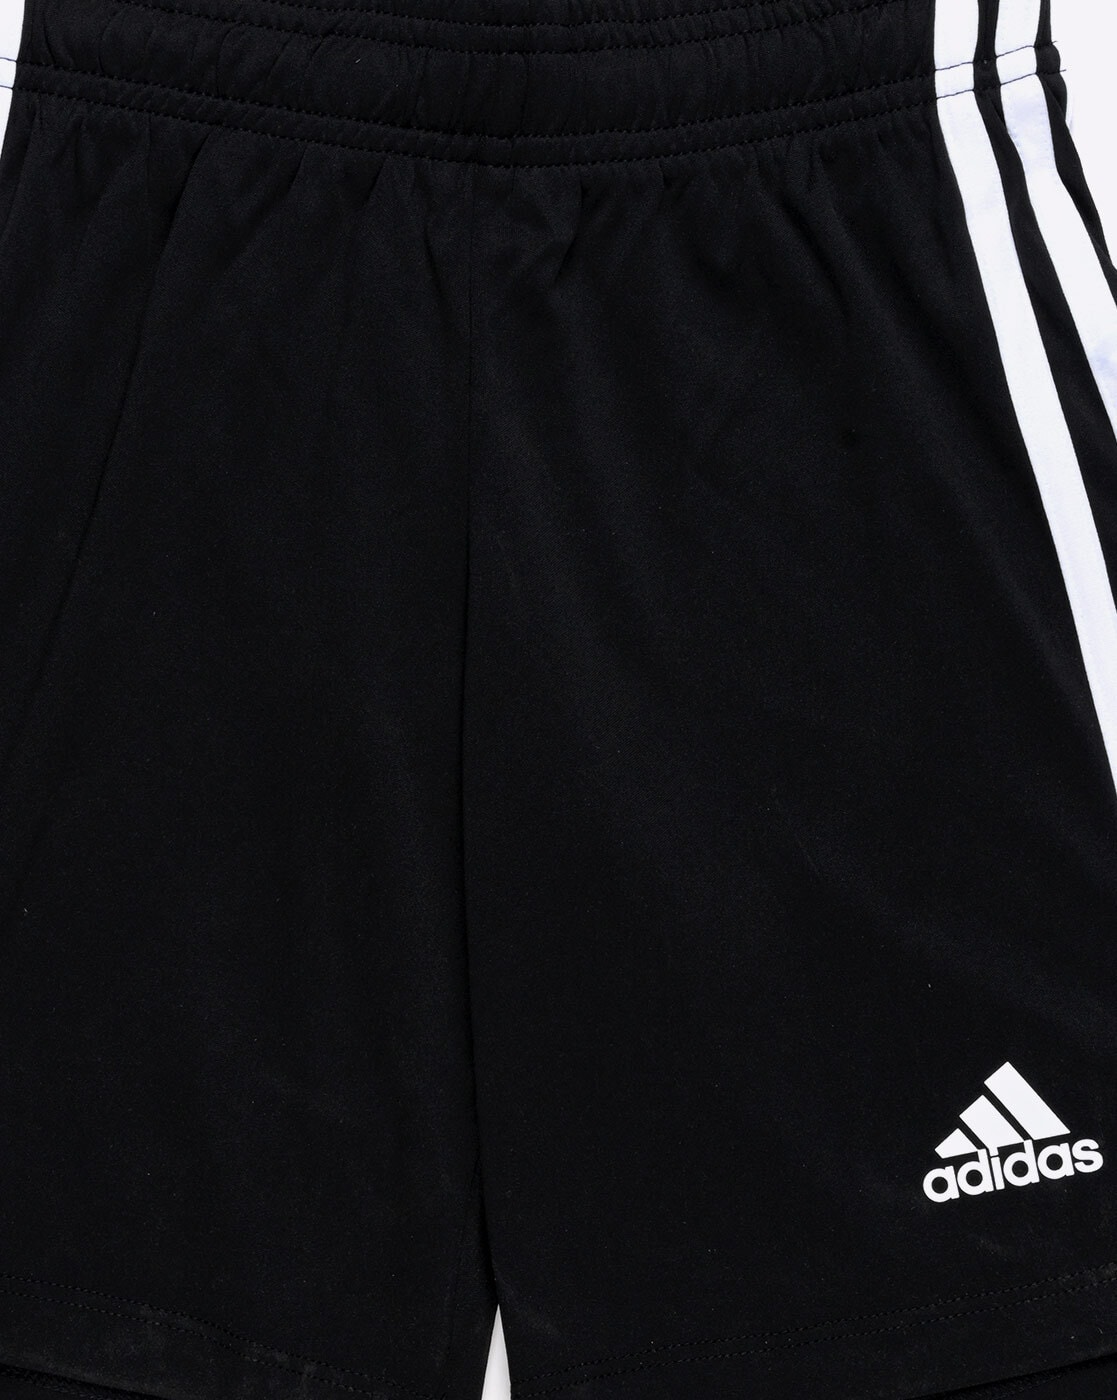 Adidas Kids Black Athletic Shorts Boys Size Large - beyond exchange